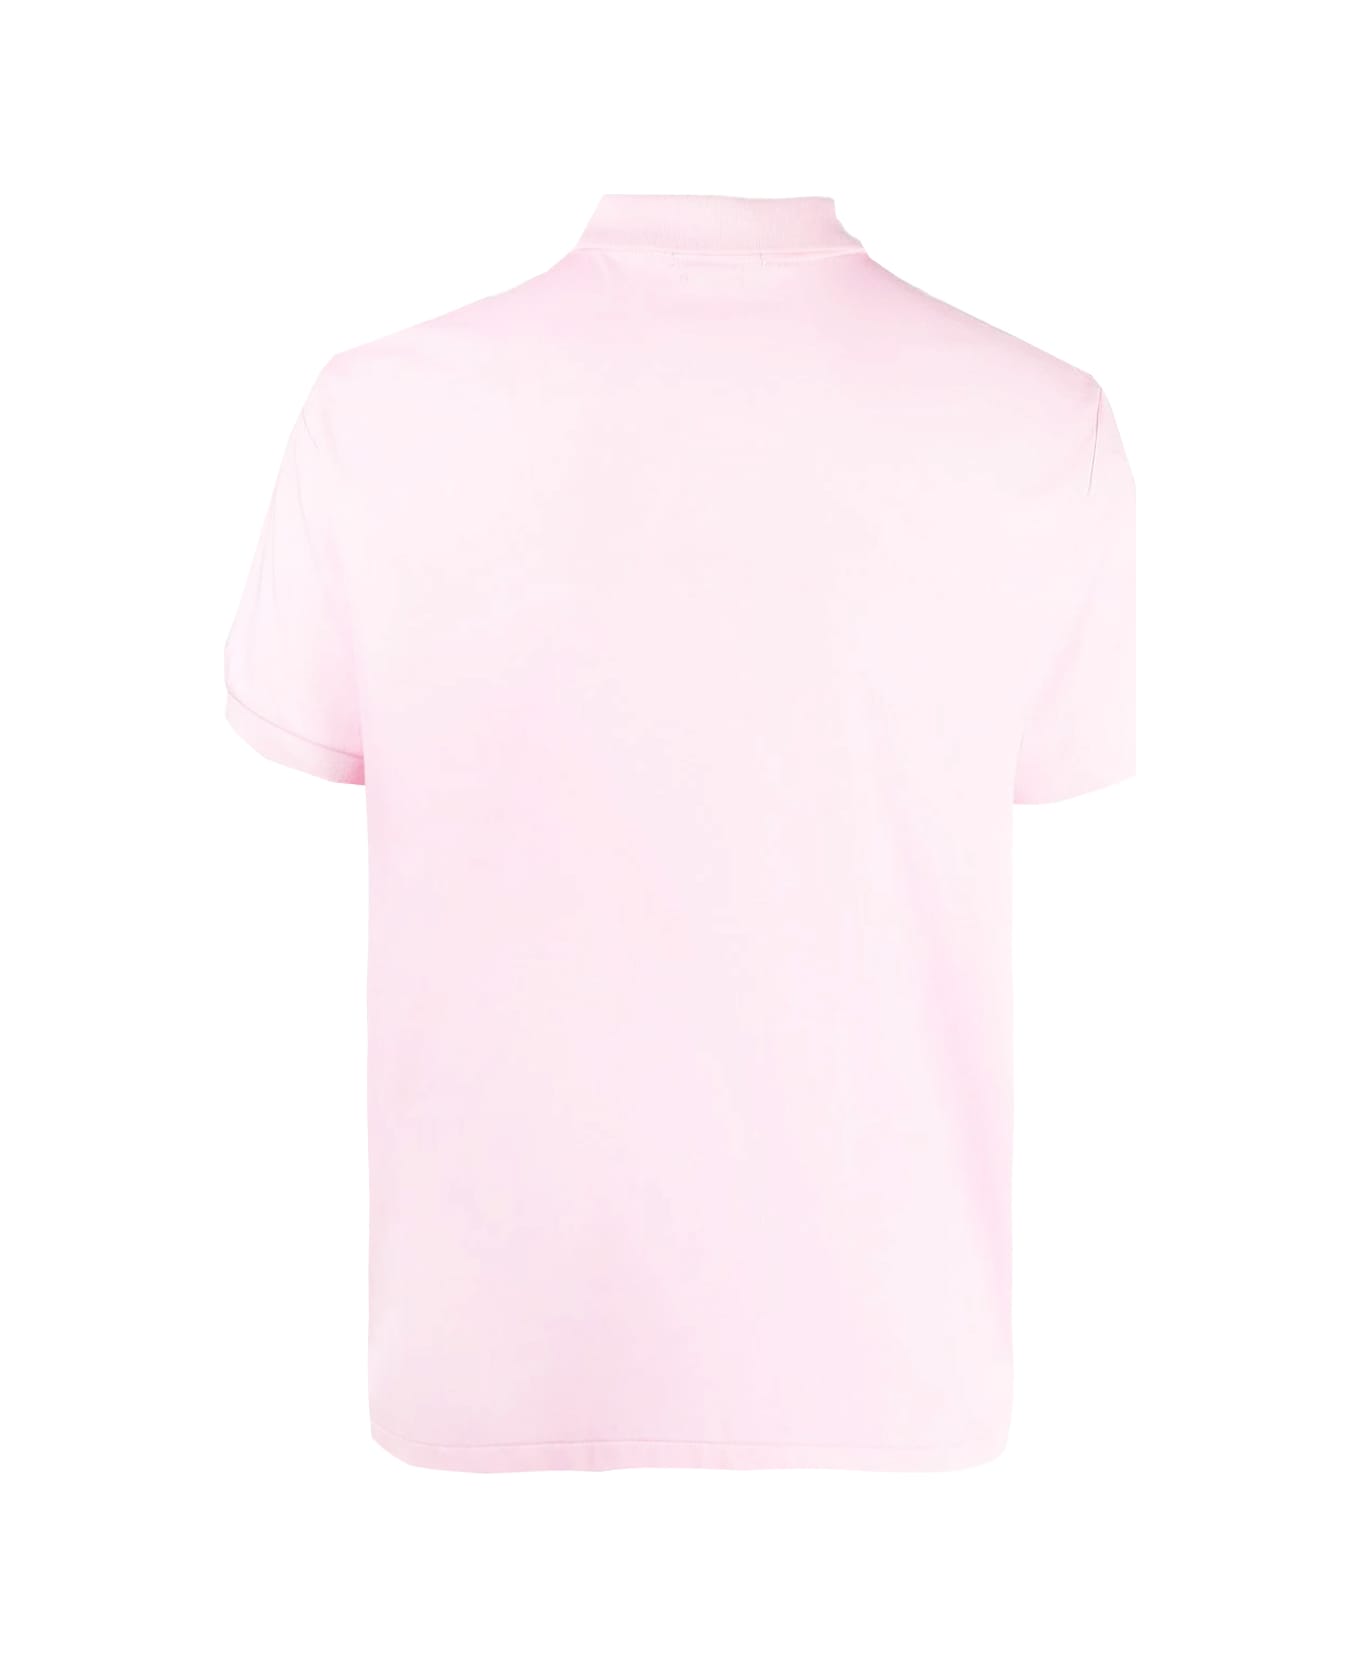 Polo Ralph Lauren Polo Shirt - Pink